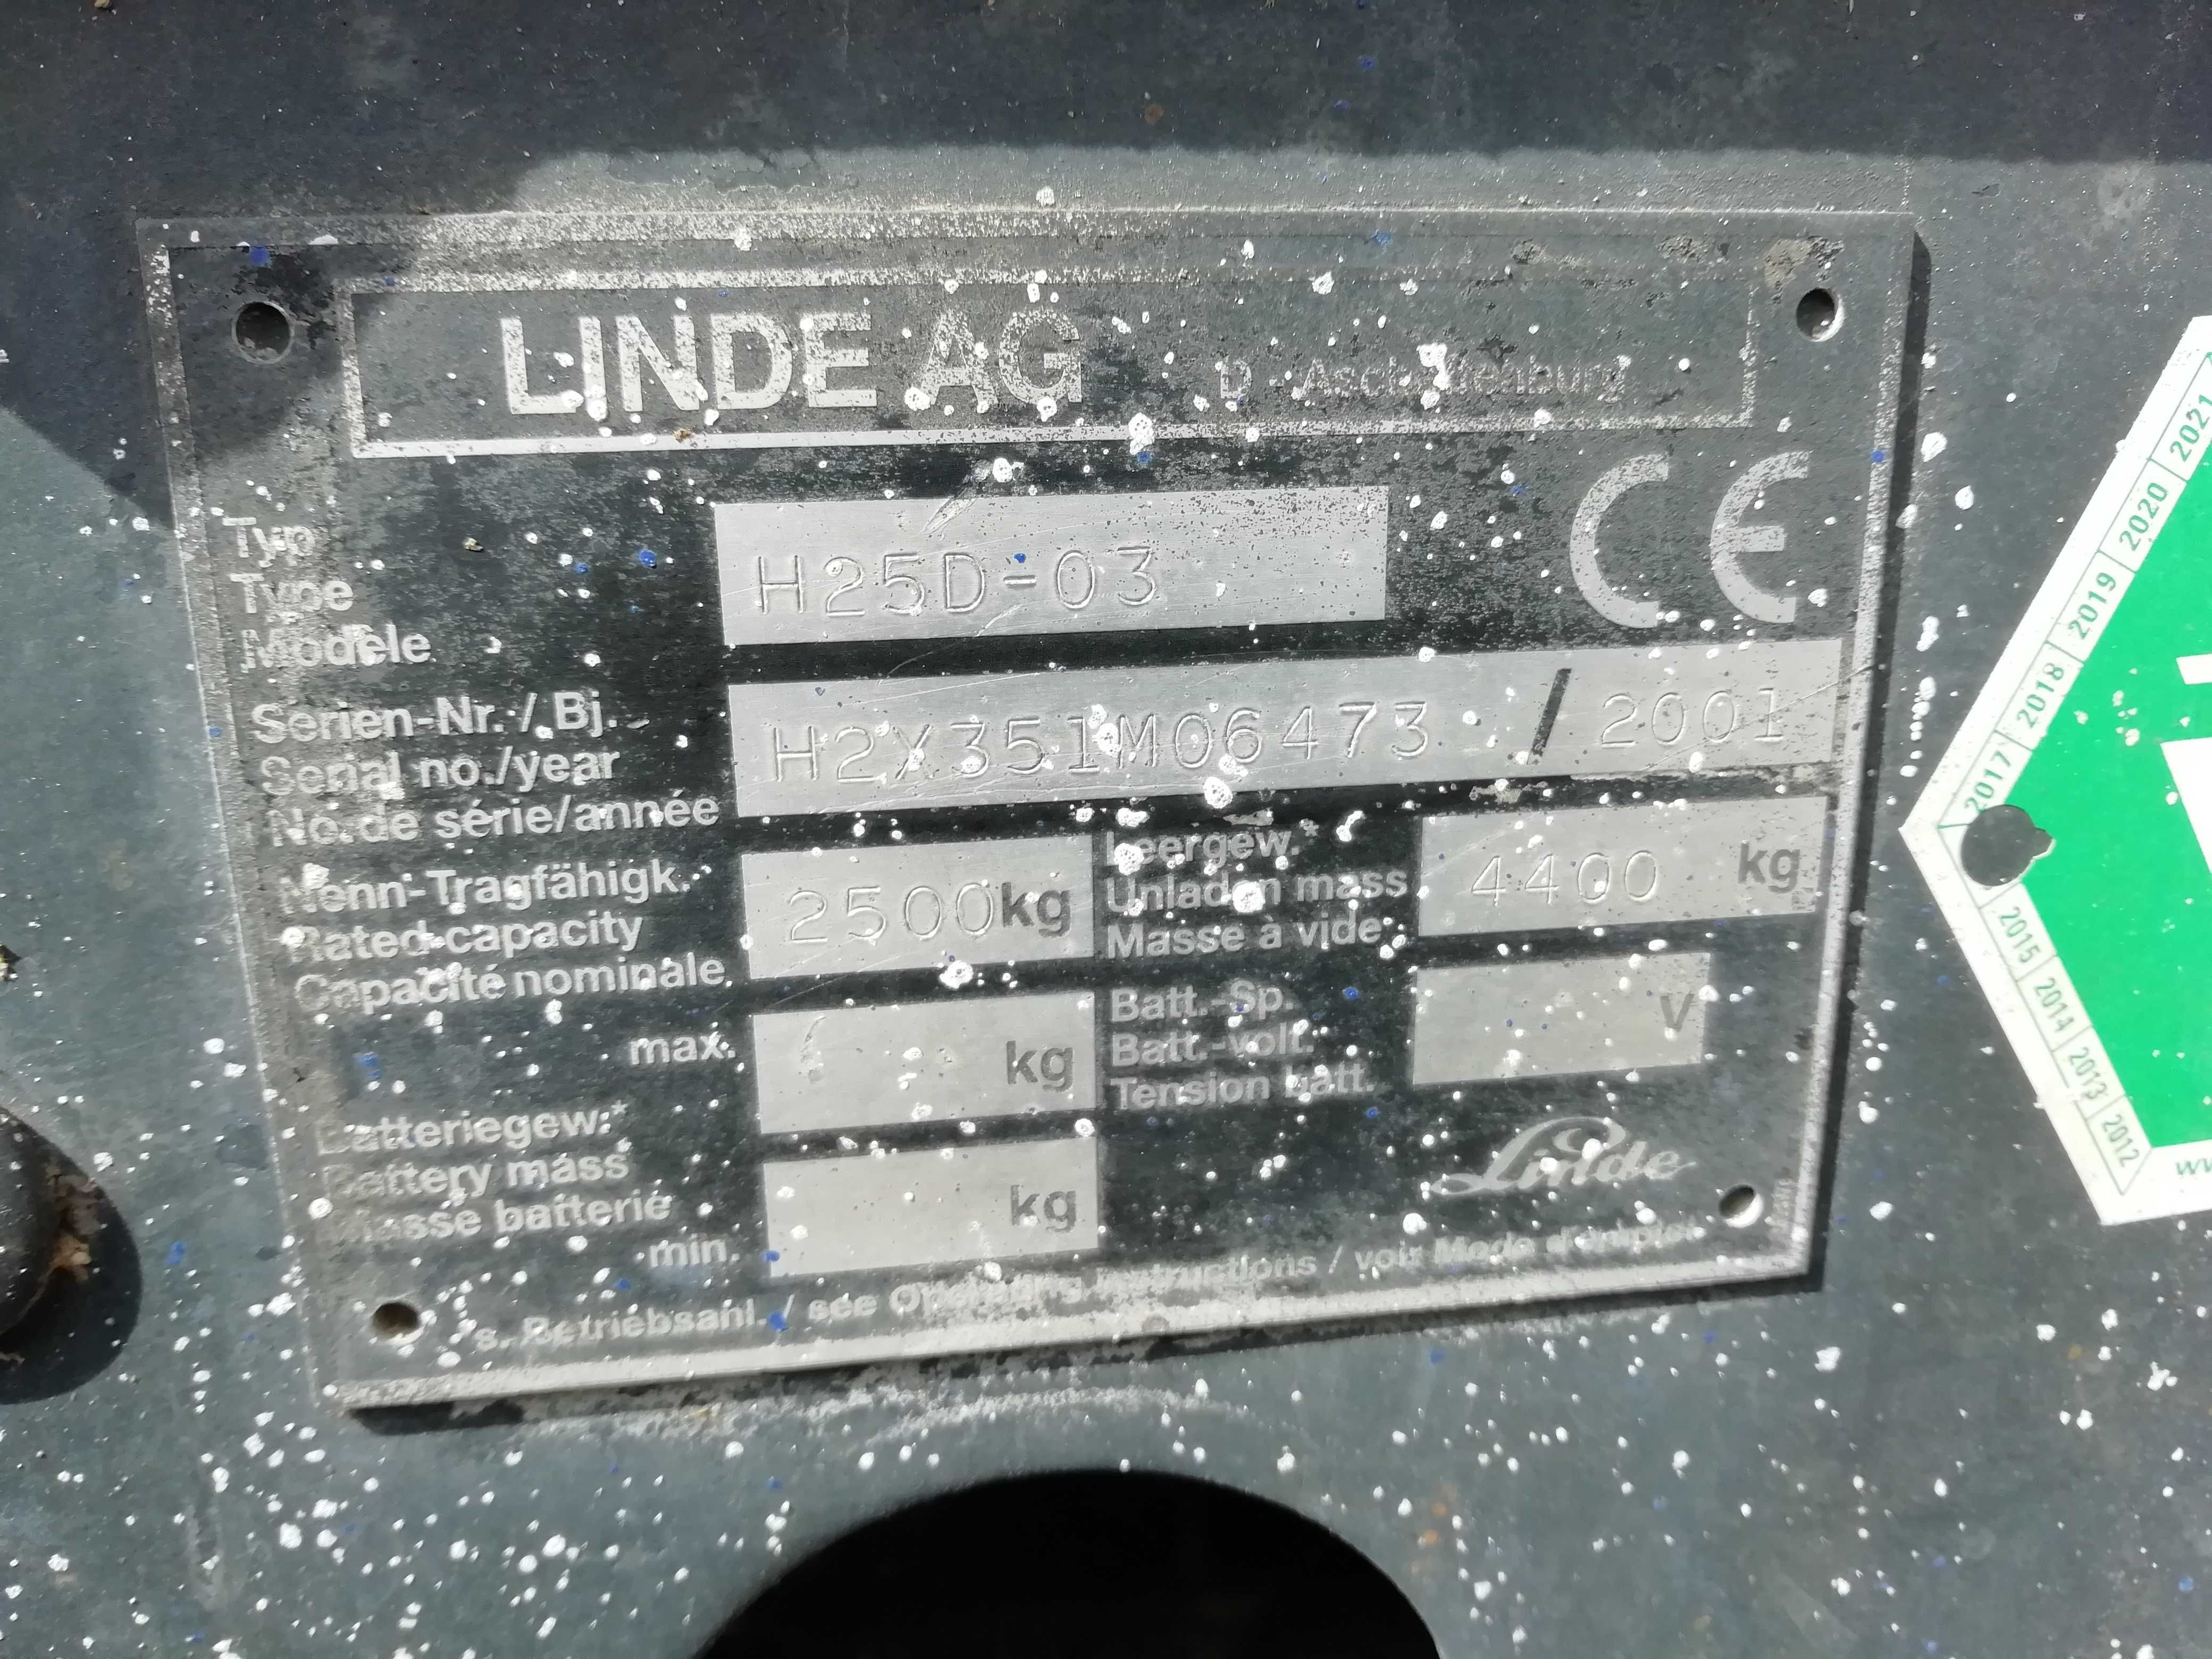 Wózek widłowy Linde H25D-03 rocznik 2001